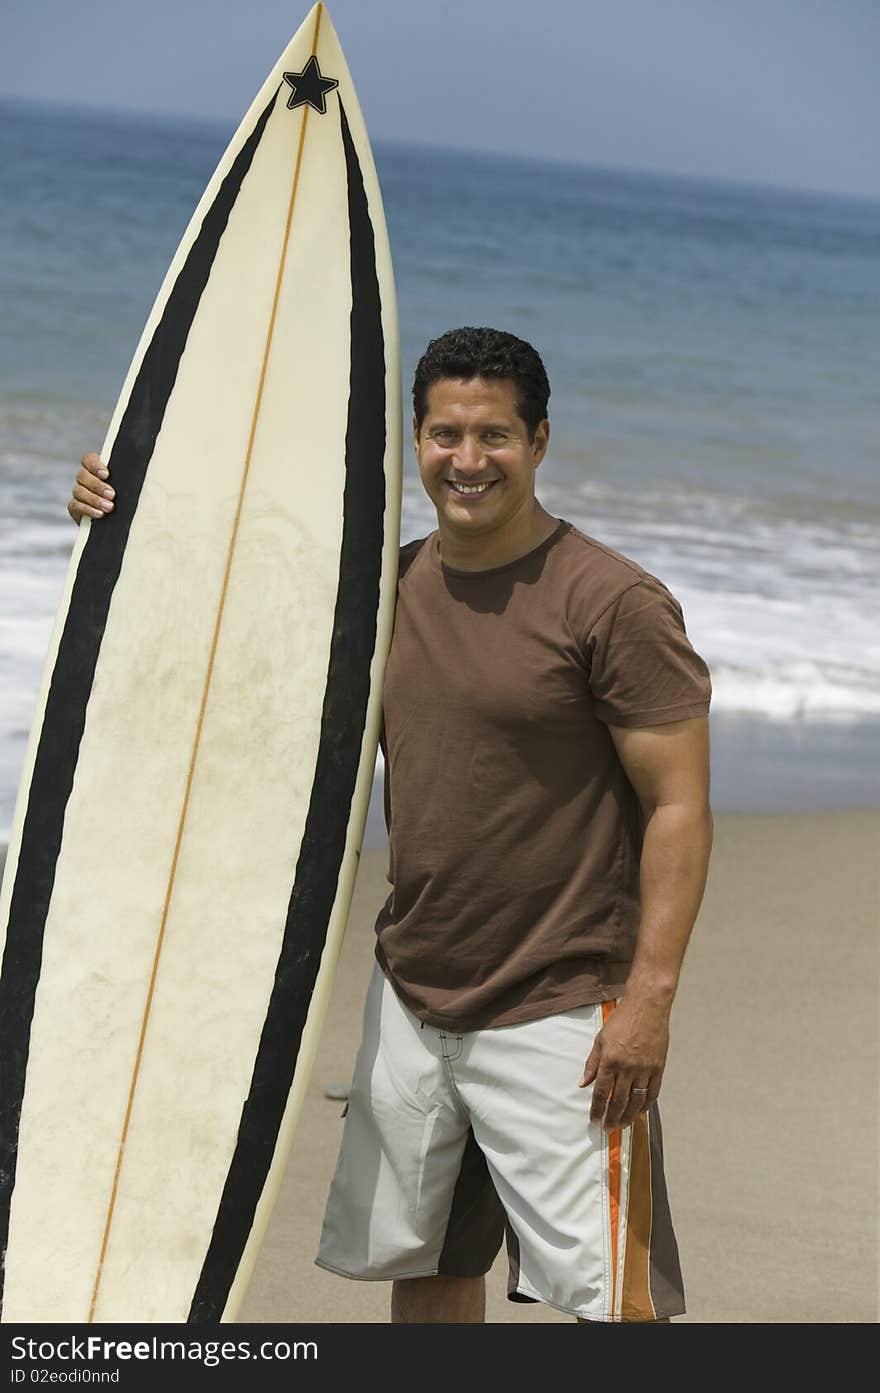 Man Holding Surfboard on beach